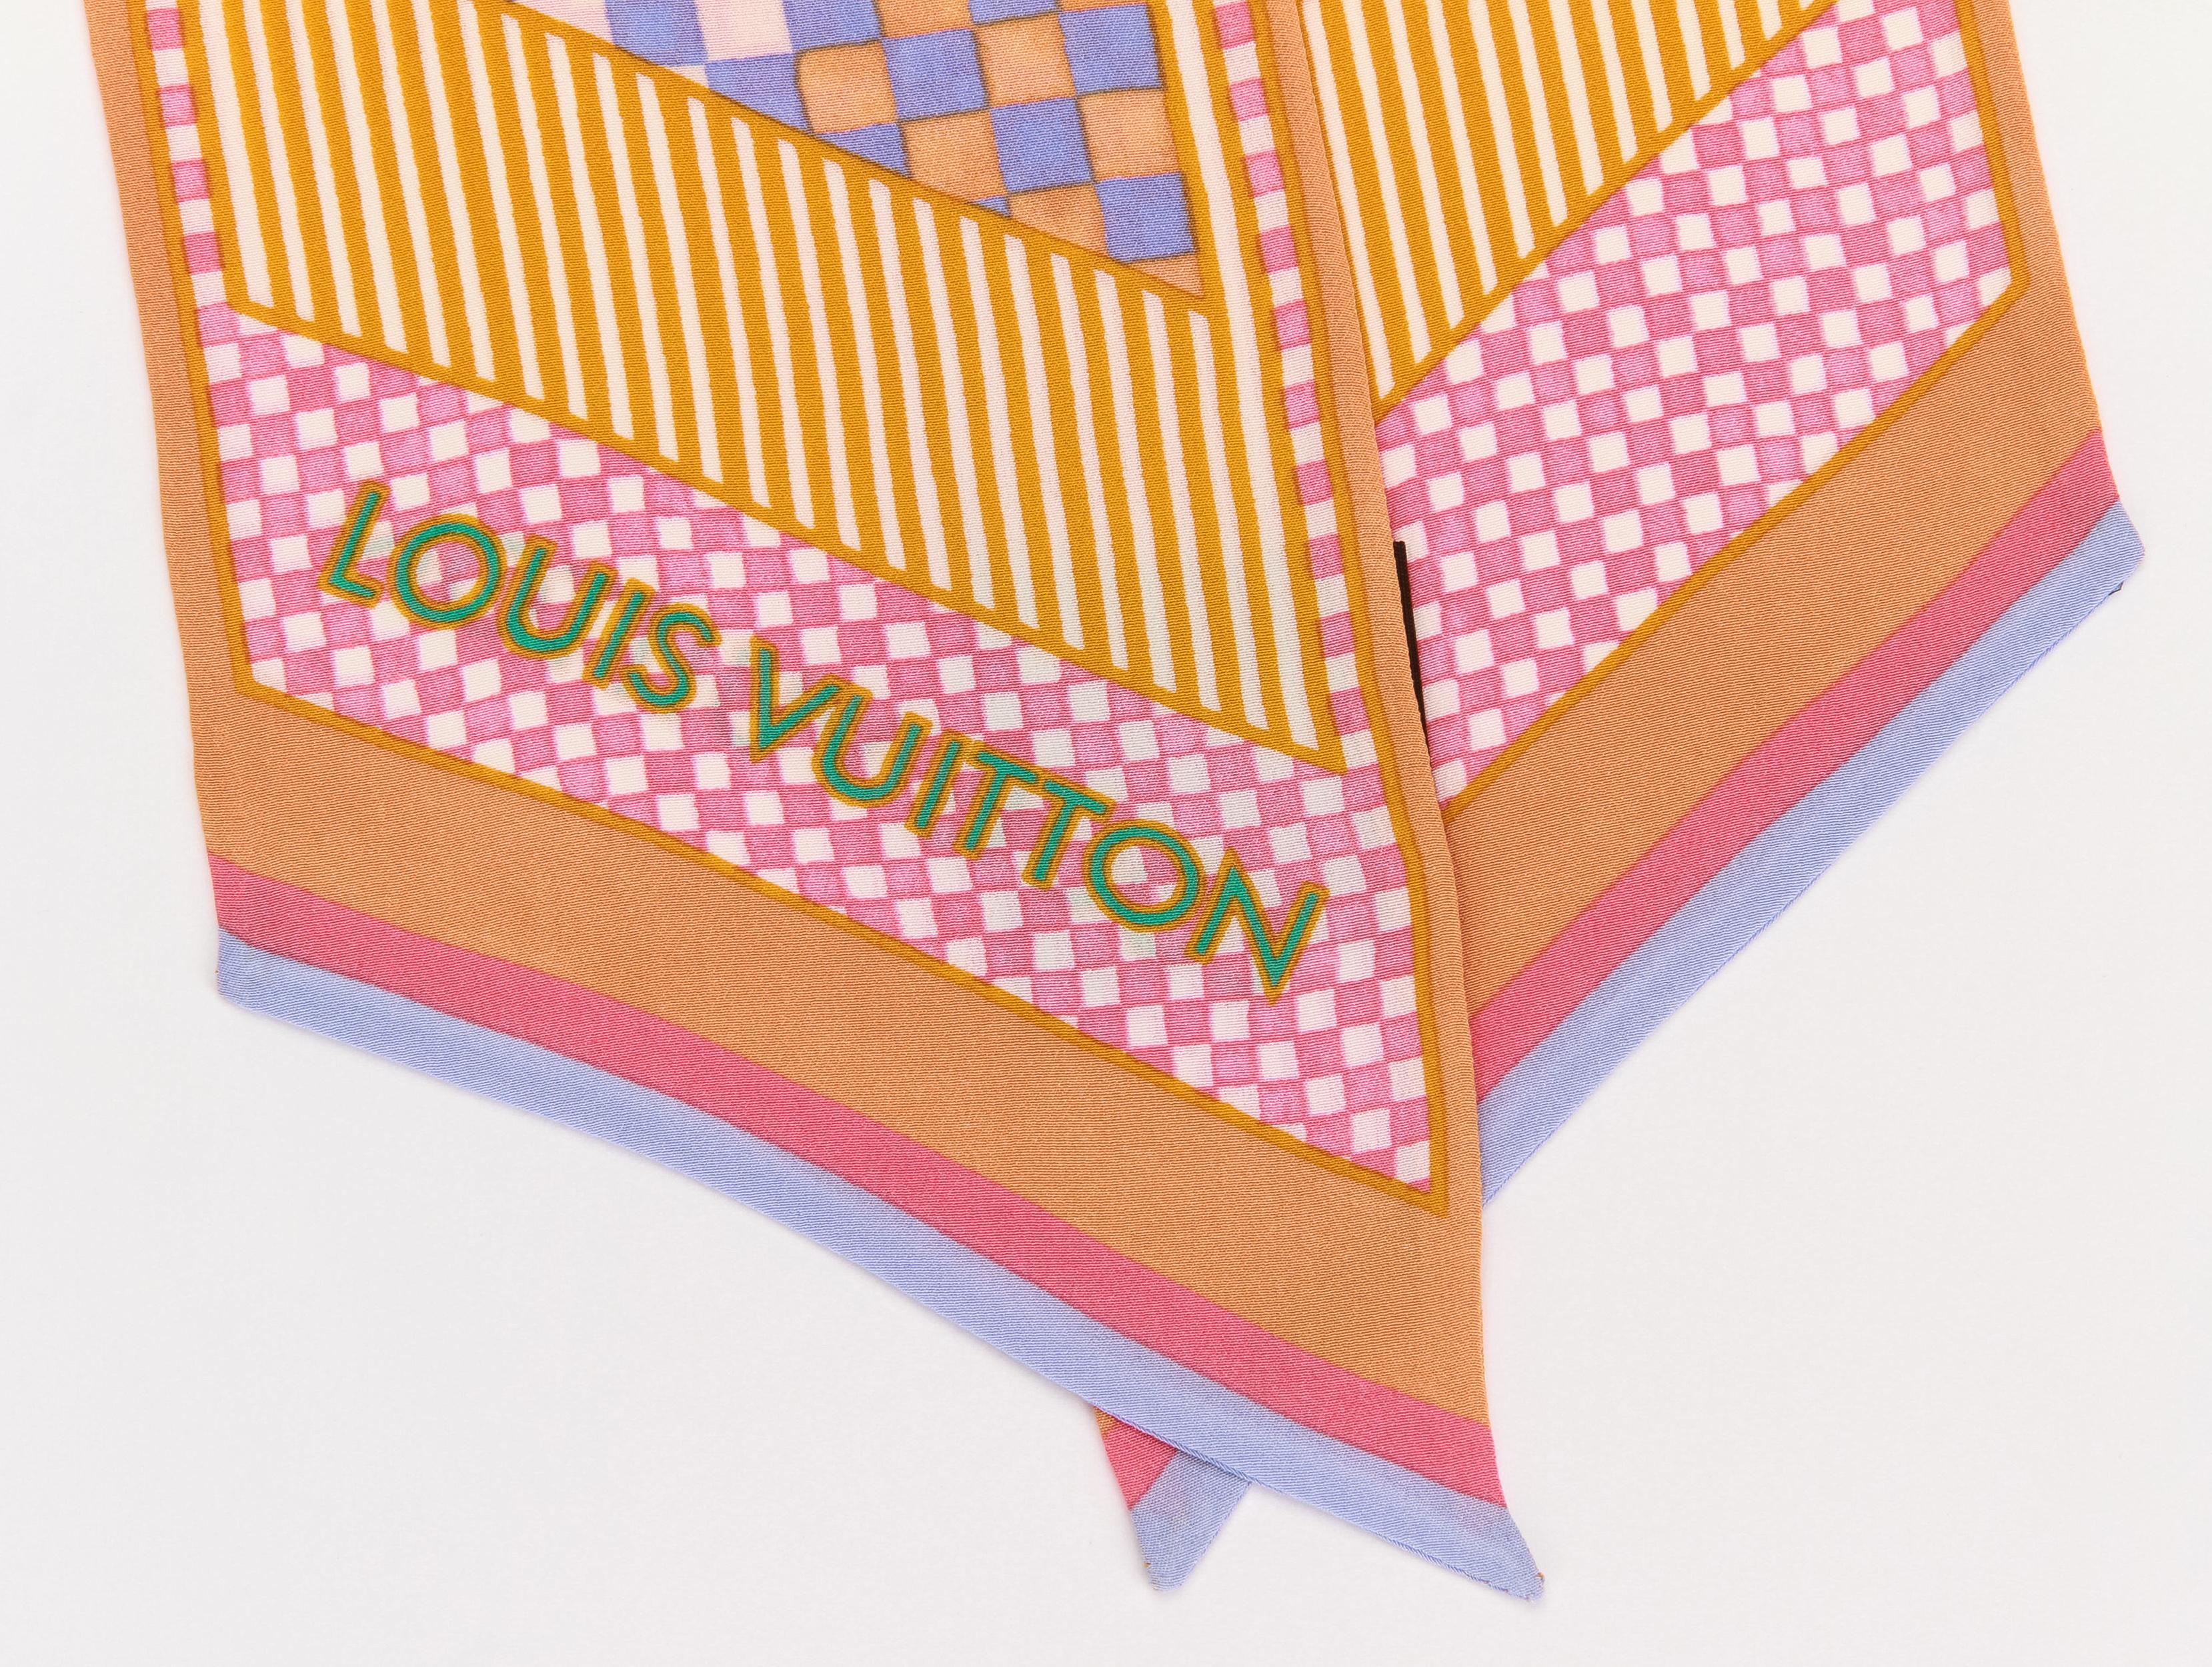 New Louis Vuitton geometric maxi twilly, orange, green, pink, blue, 
100% silk
50